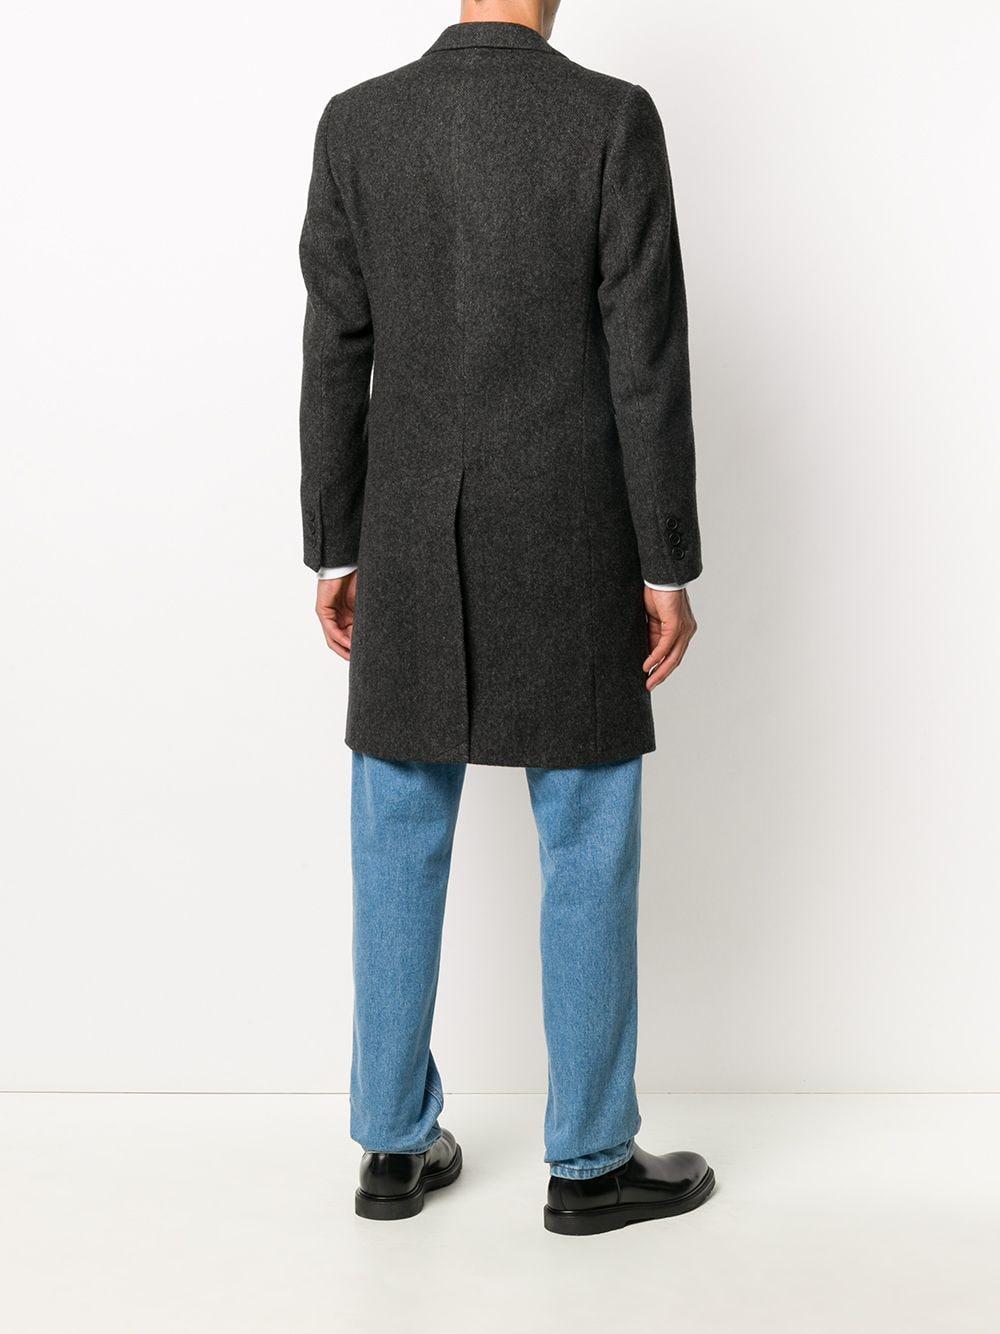 Sandro Wool Apollo Herringbone Coat in Grey (Gray) for Men - Lyst